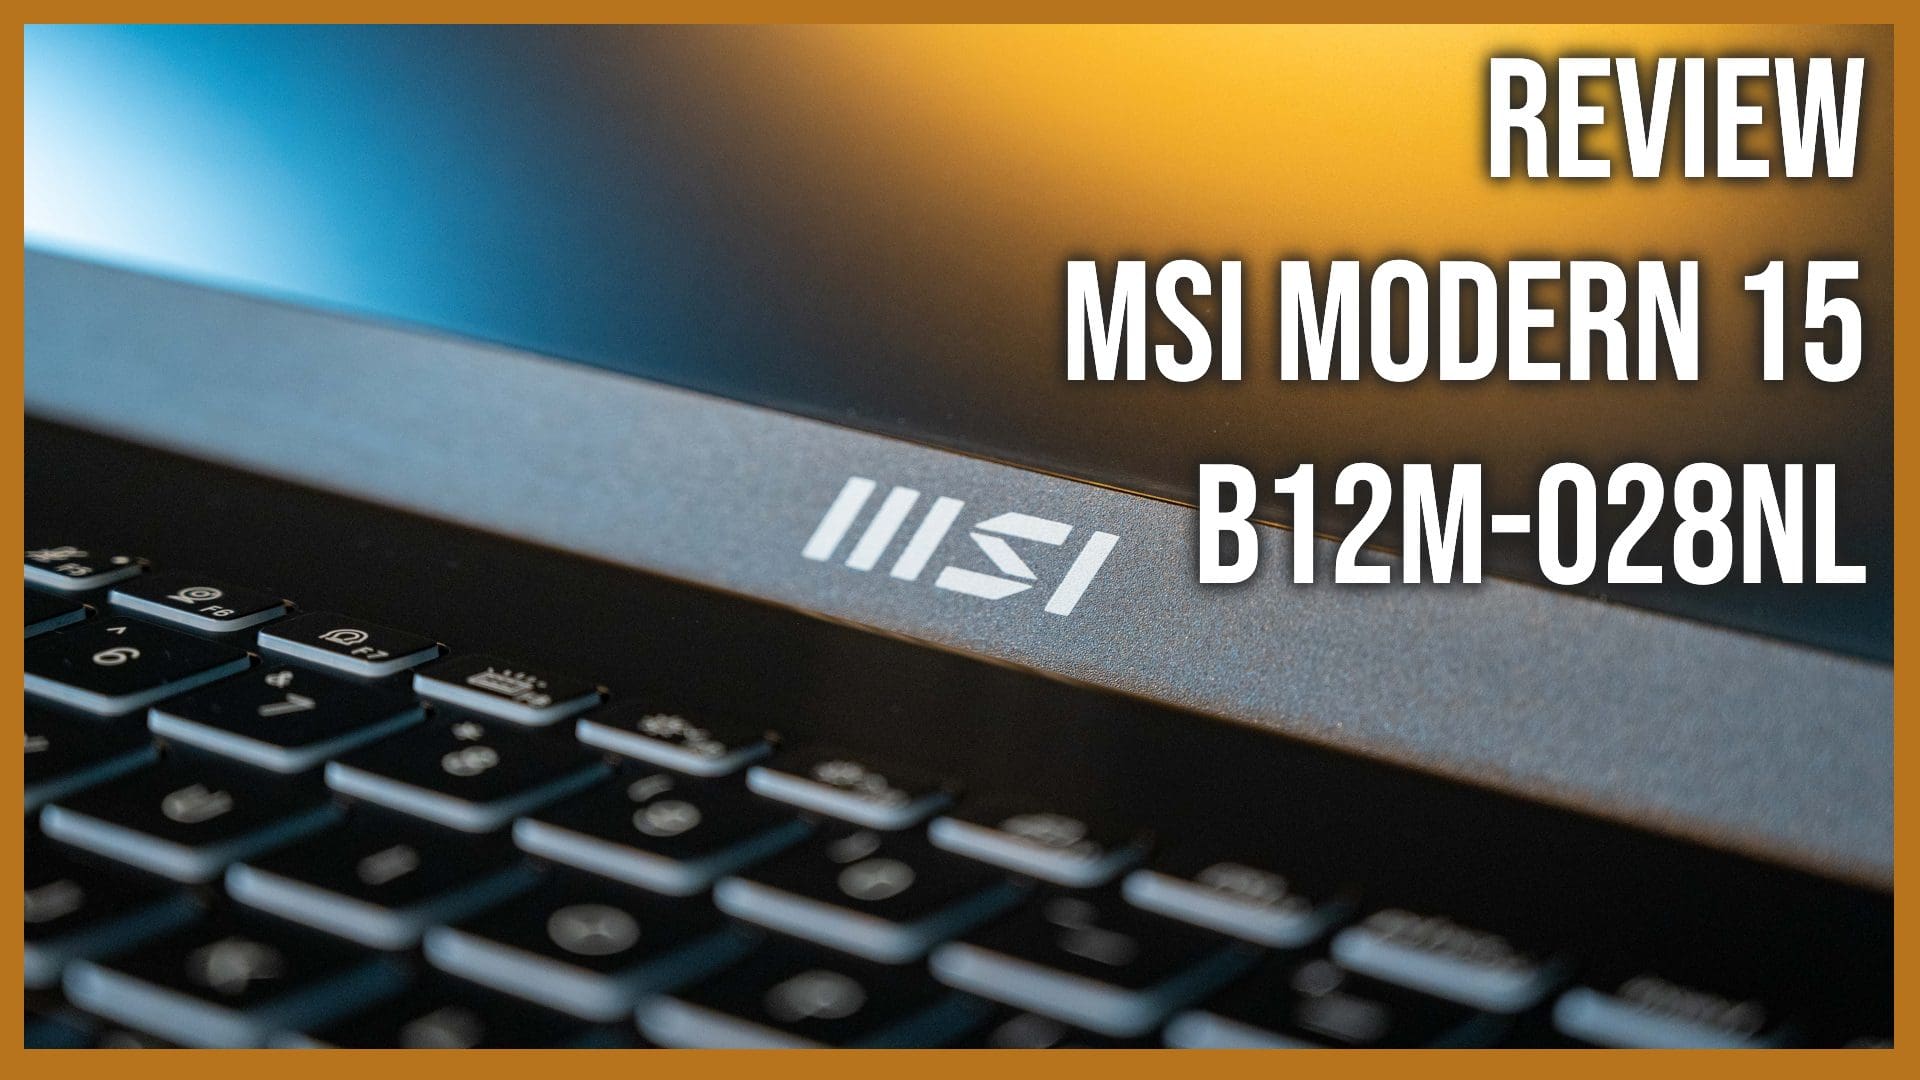 MSI modern 15 B12M thumb